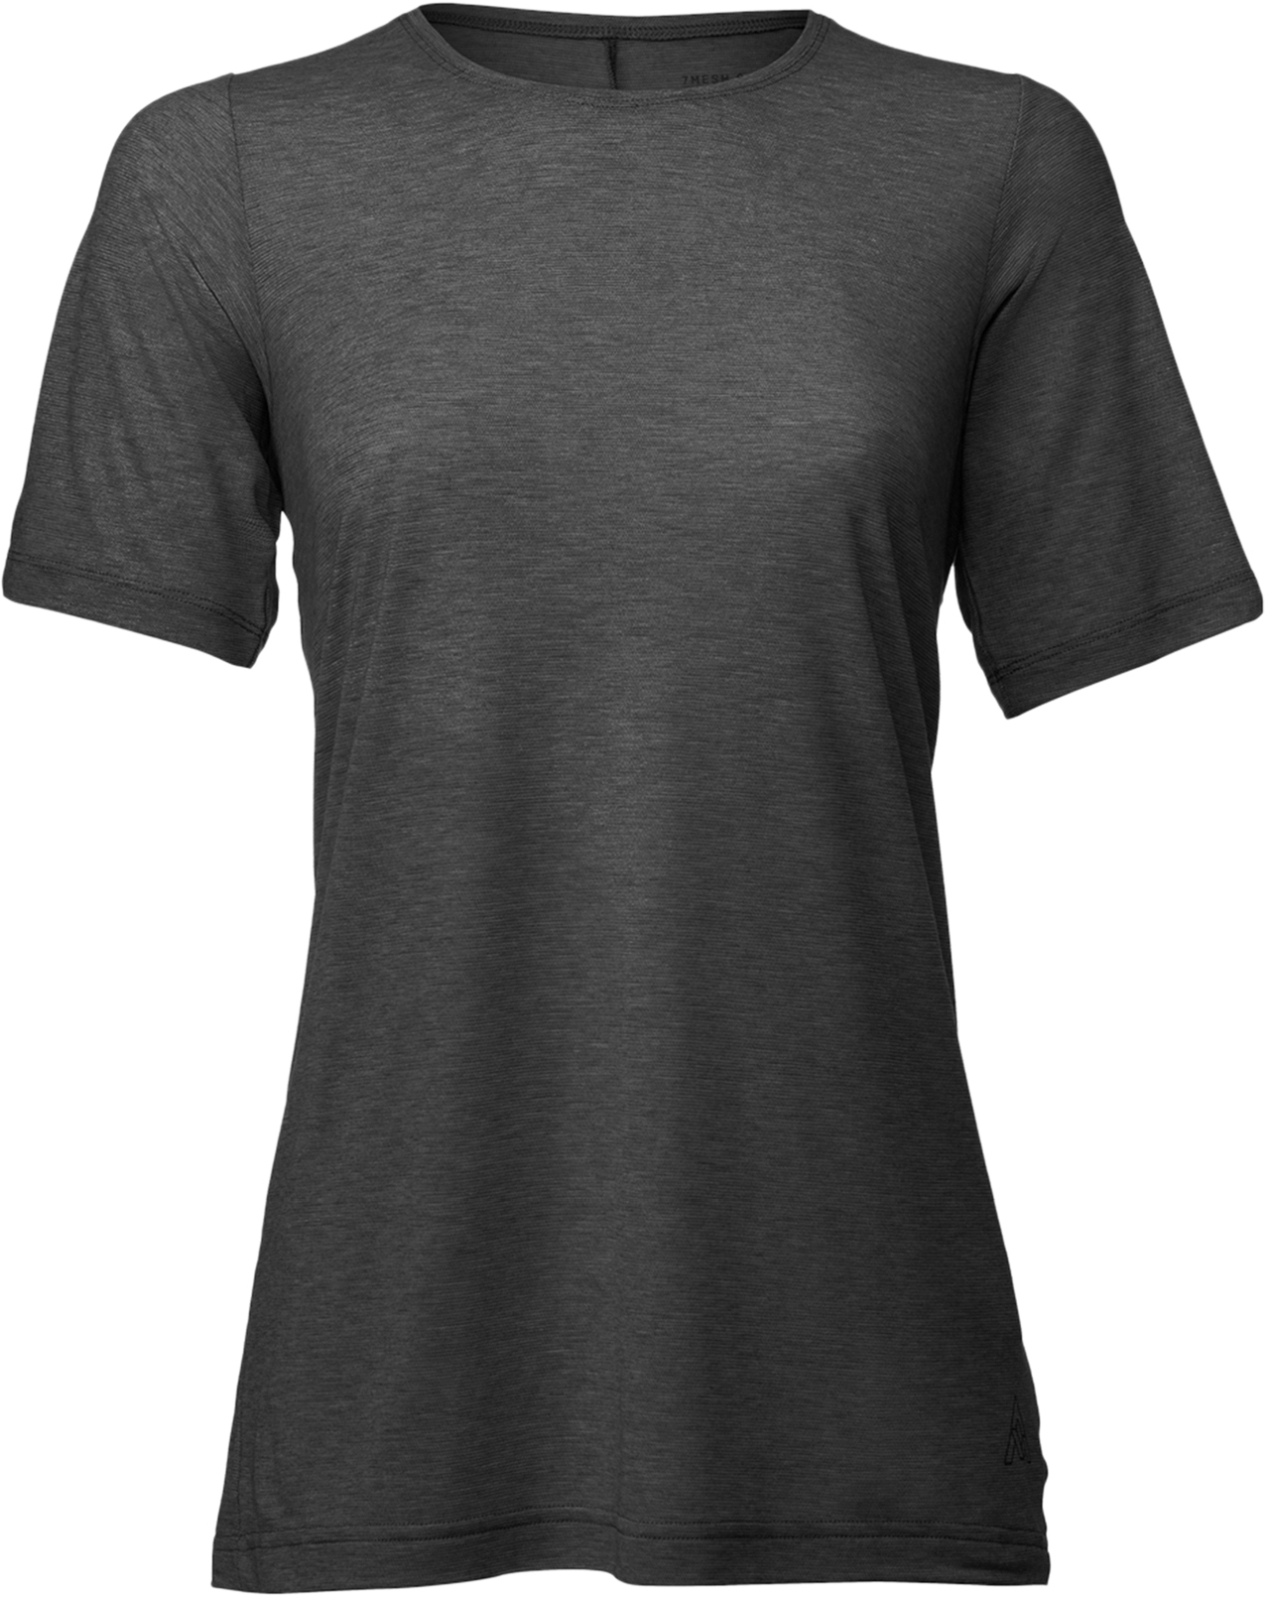 E-shop 7Mesh Elevate T-Shirt SS Women's - Black L